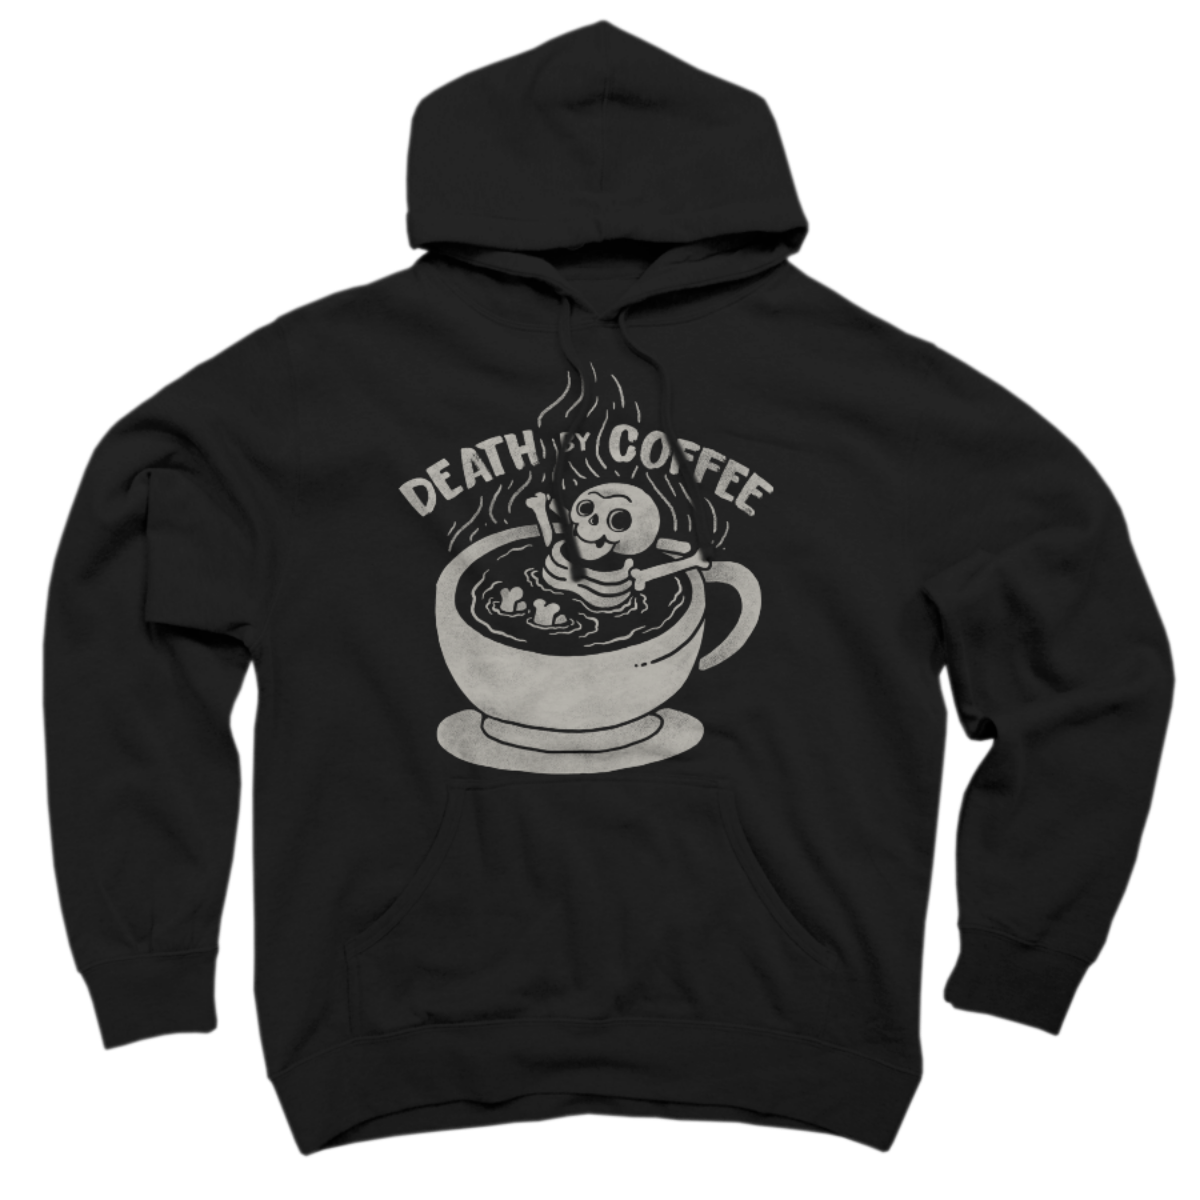 death wish coffee hoodie